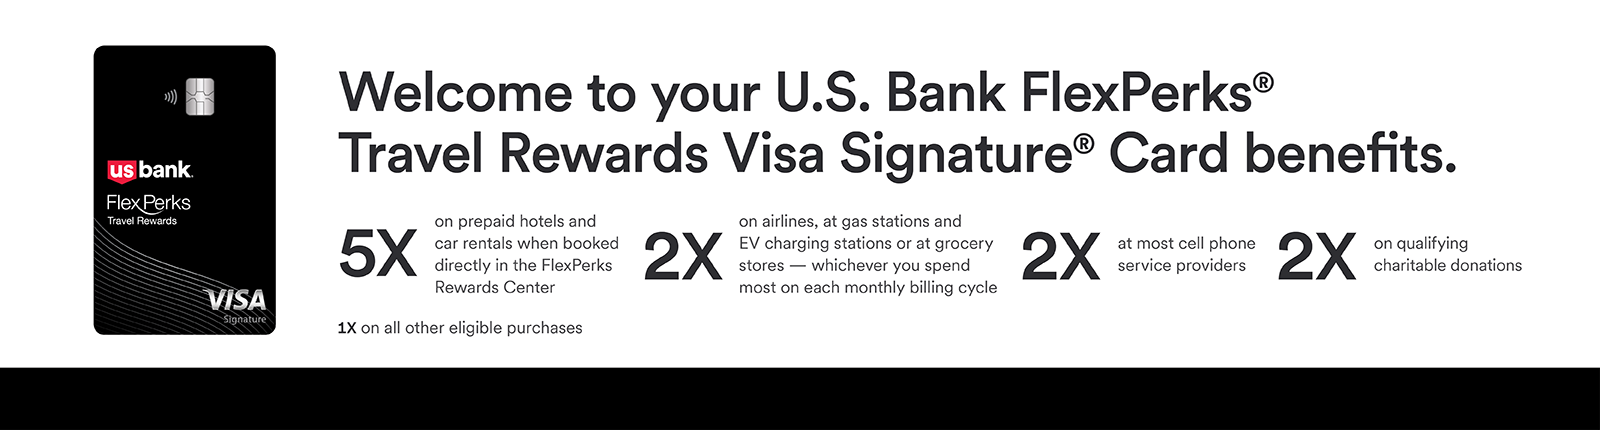 U.S. Bank FlexPerks® Travel Rewards Visa Signature® Card benefits